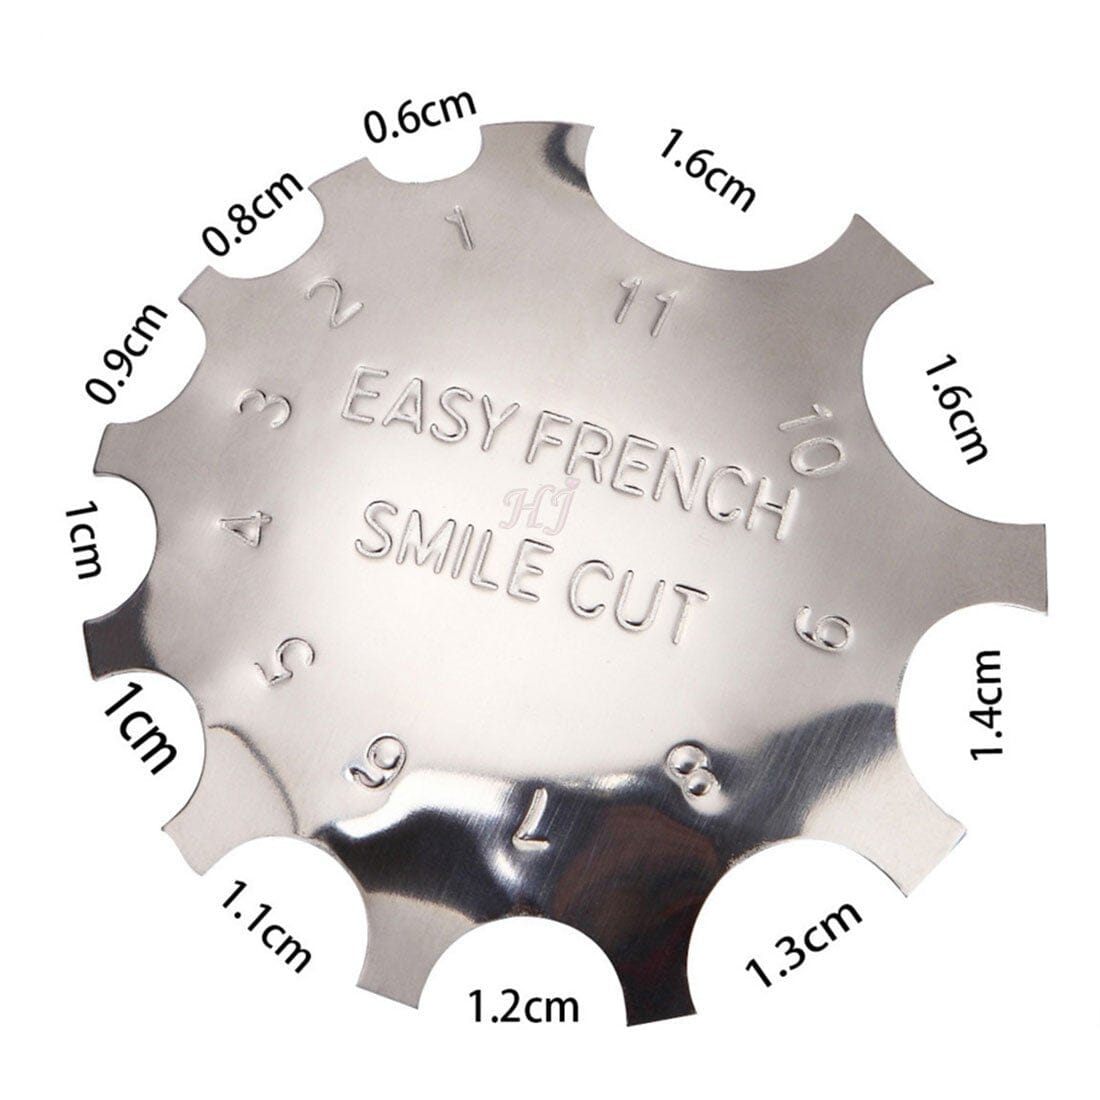 Easy French Smile Line Cut Tool - NSI Australia